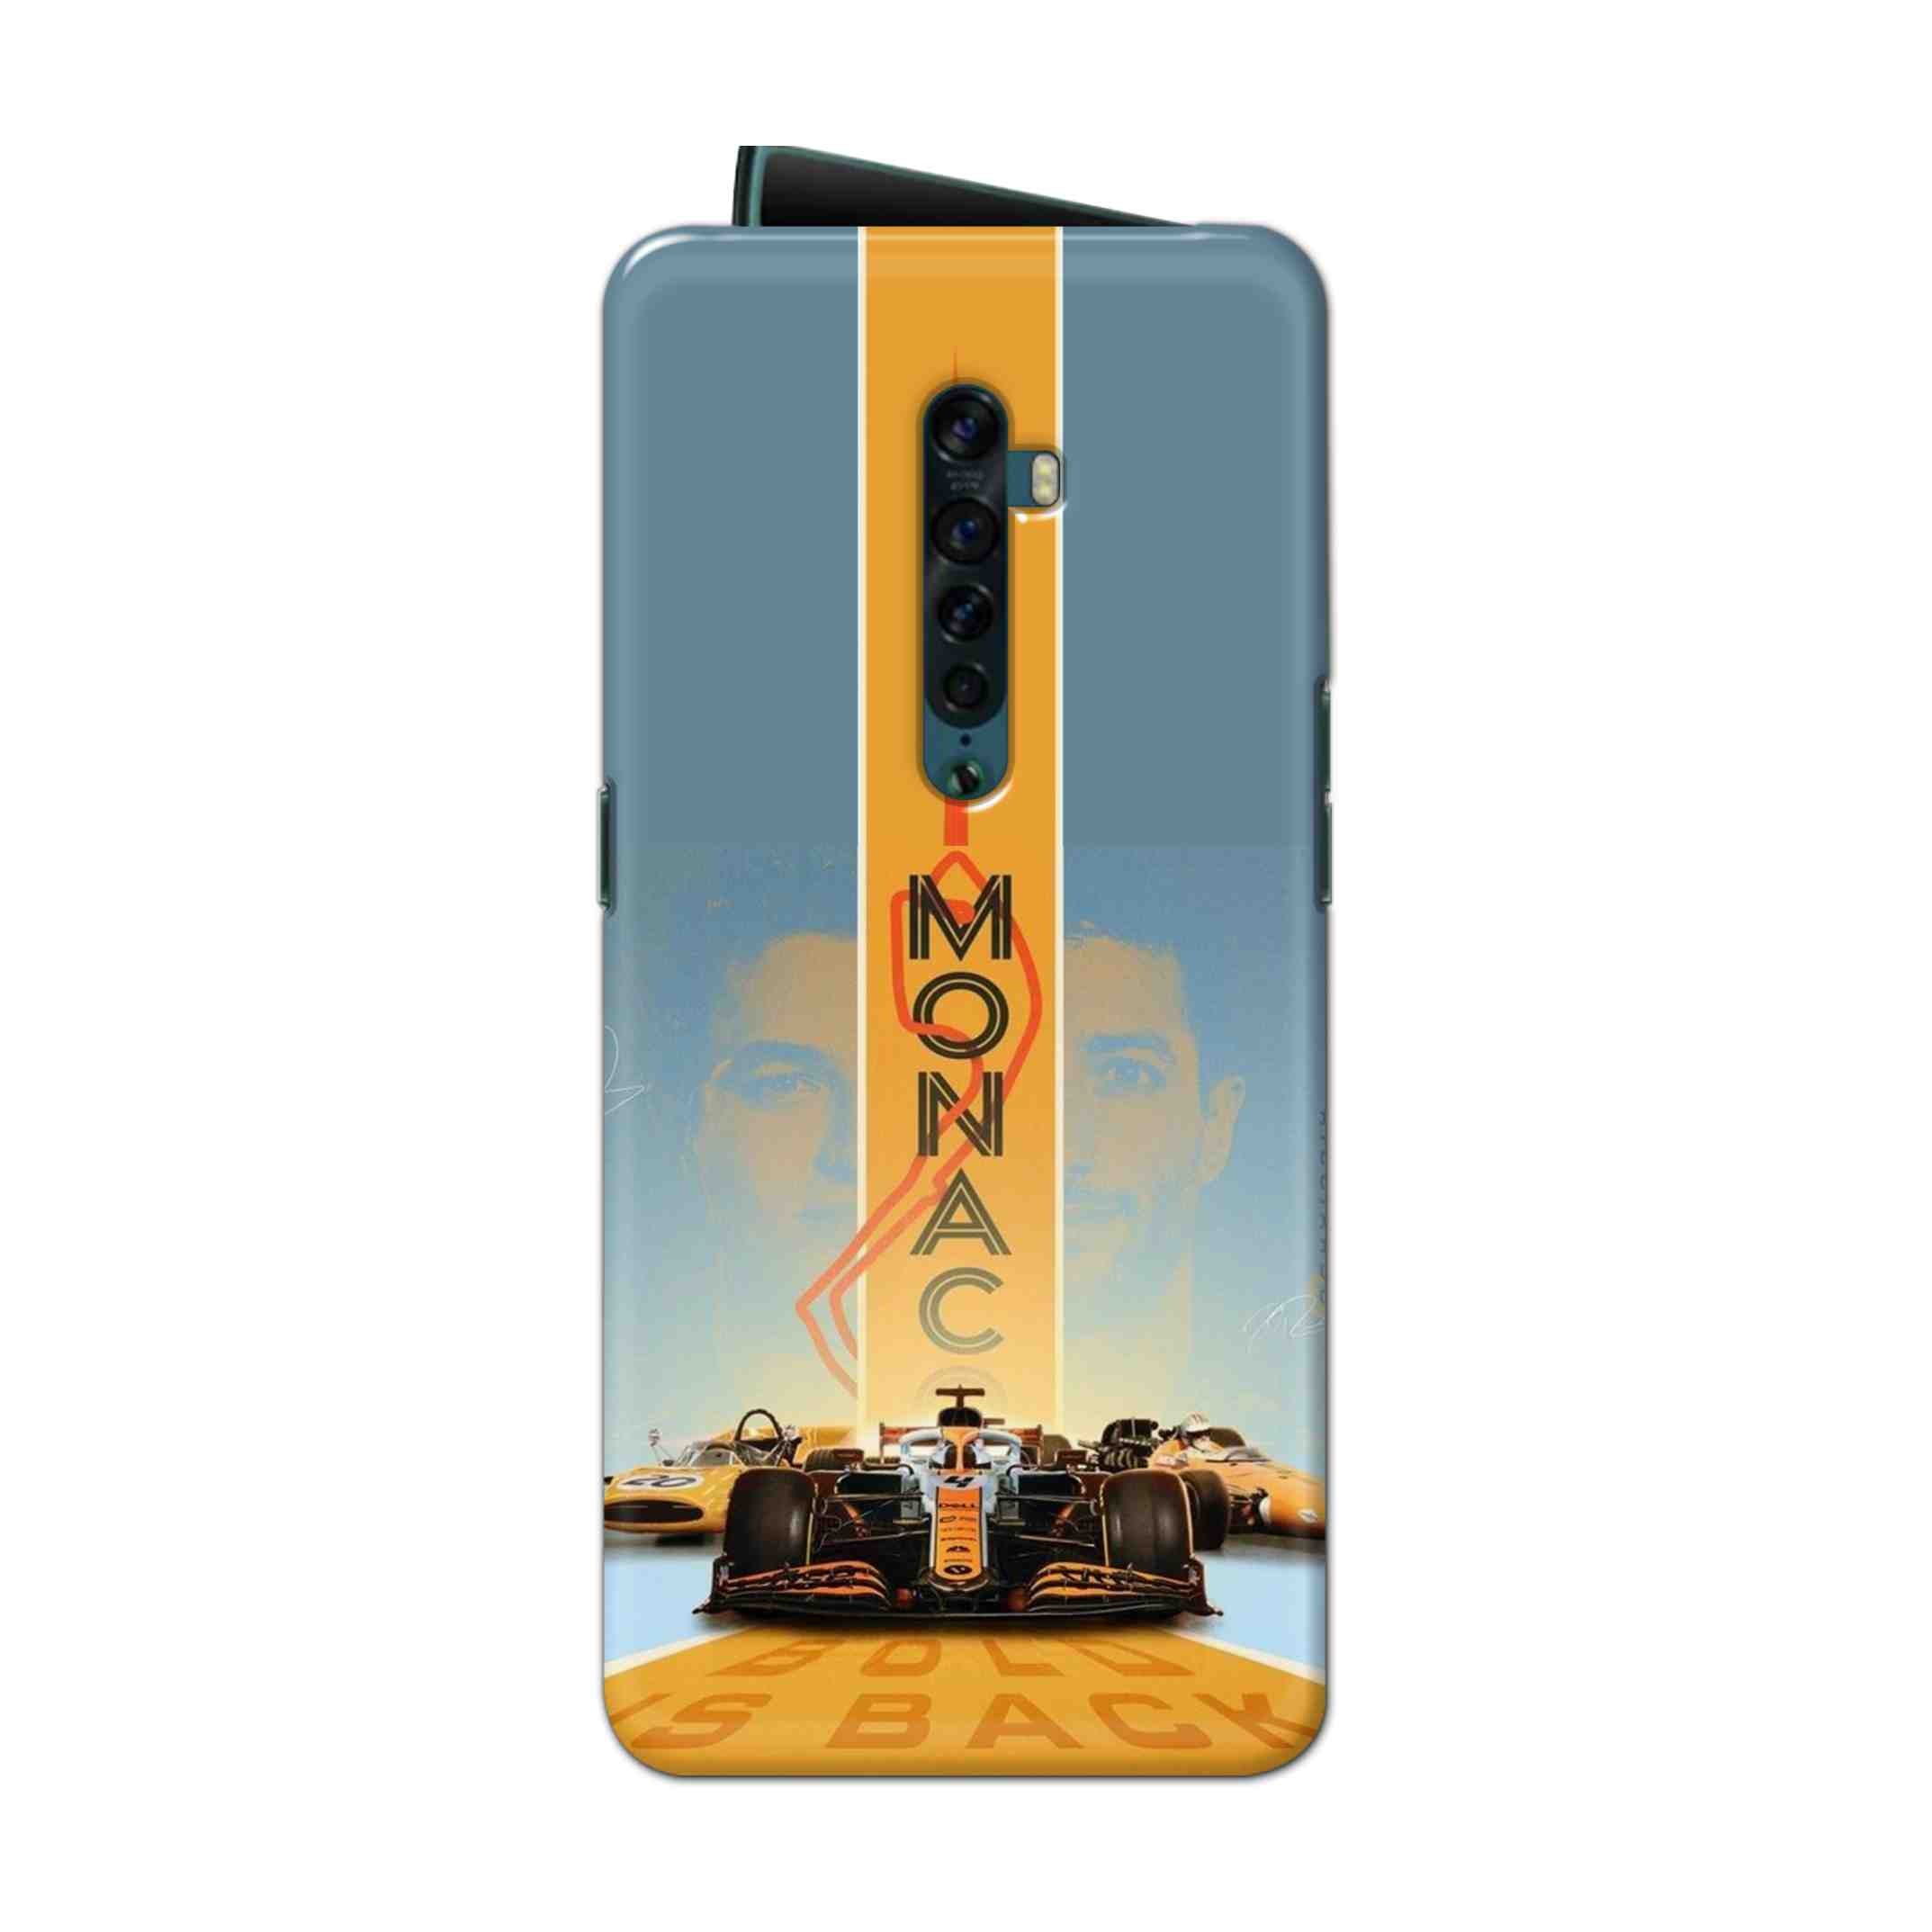 Buy Monac Formula Hard Back Mobile Phone Case Cover For Oppo Reno 2 Online